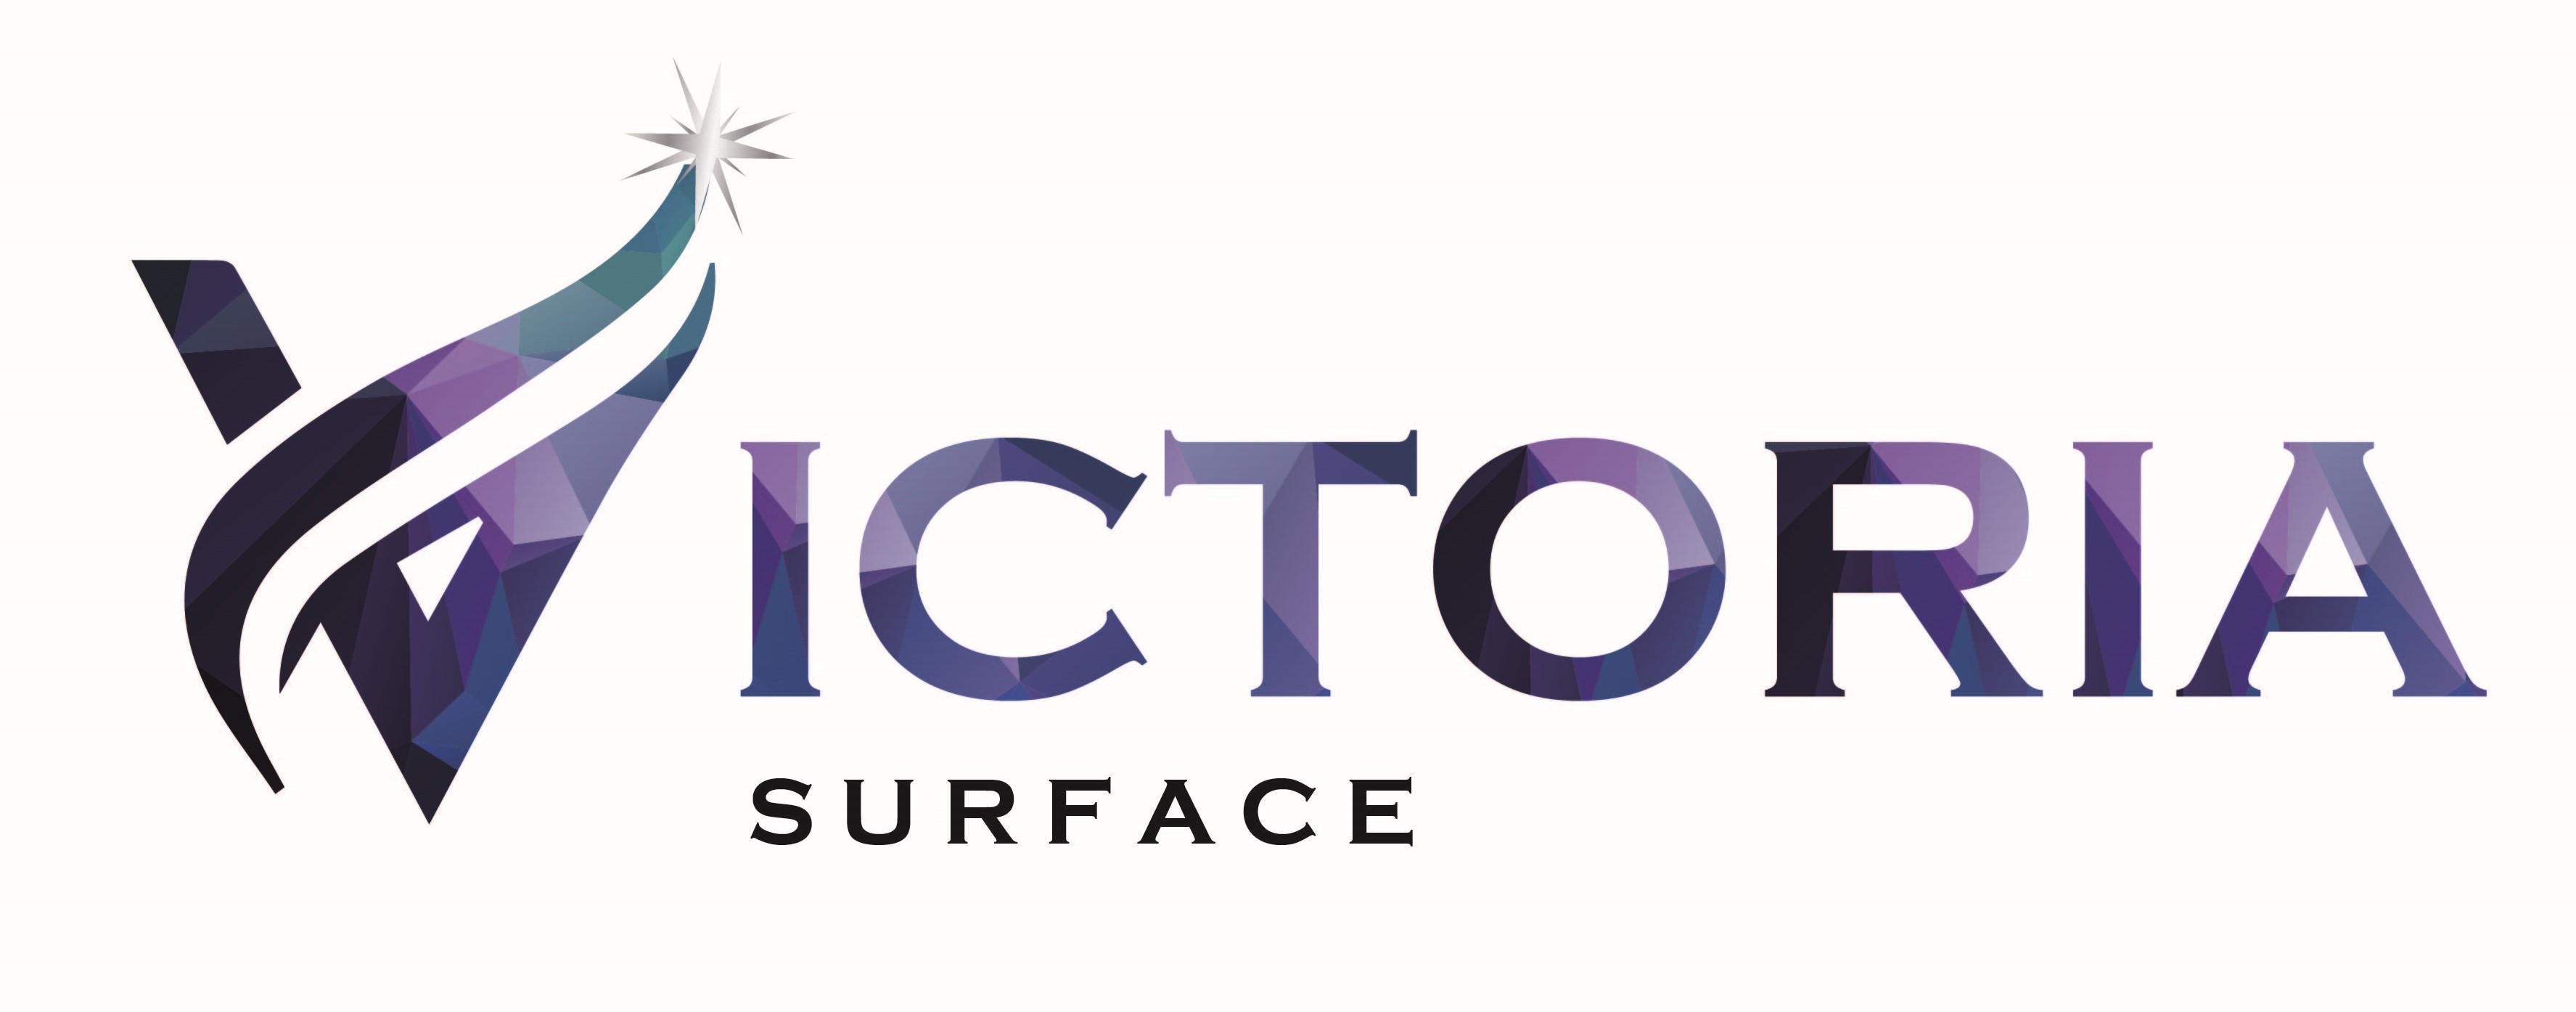 Victoria Surface 003